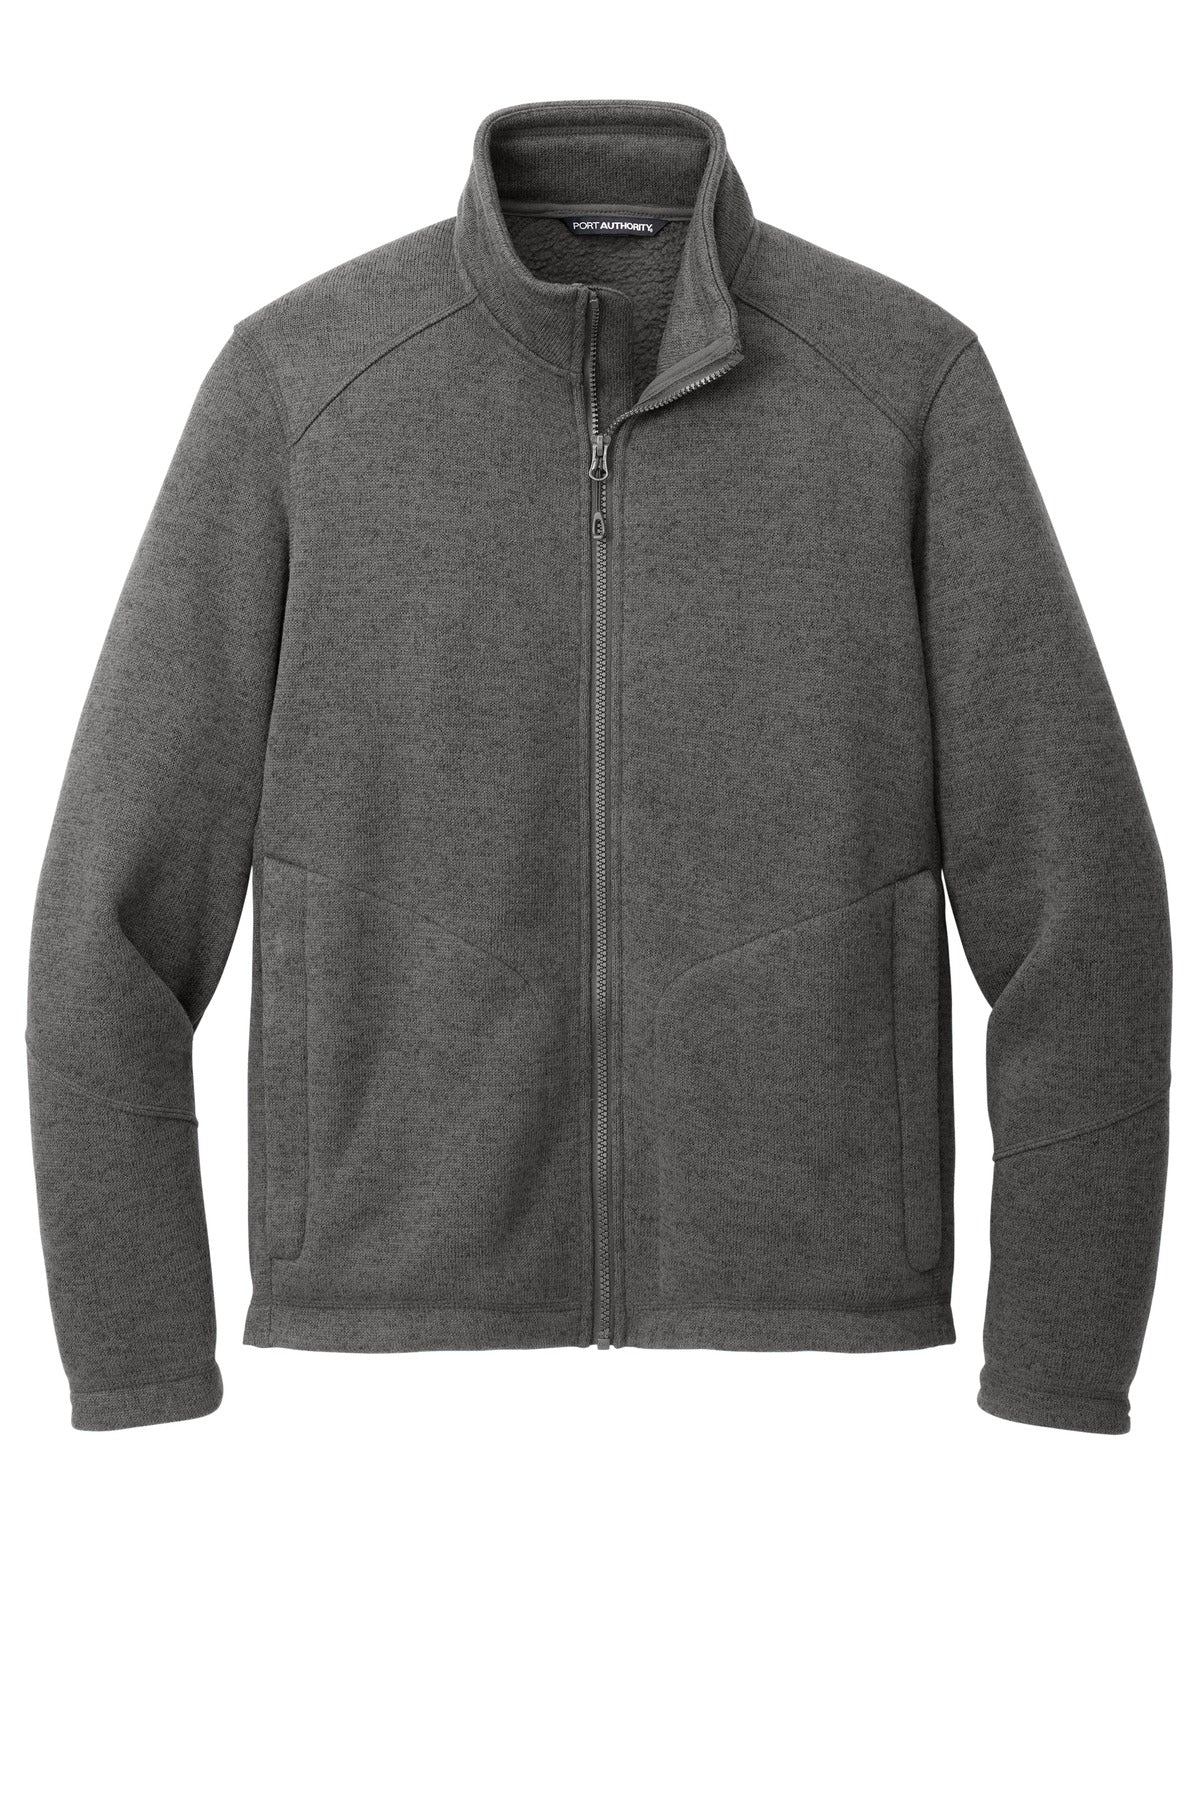 Port Authority Arc Sweater Fleece Jacket F428